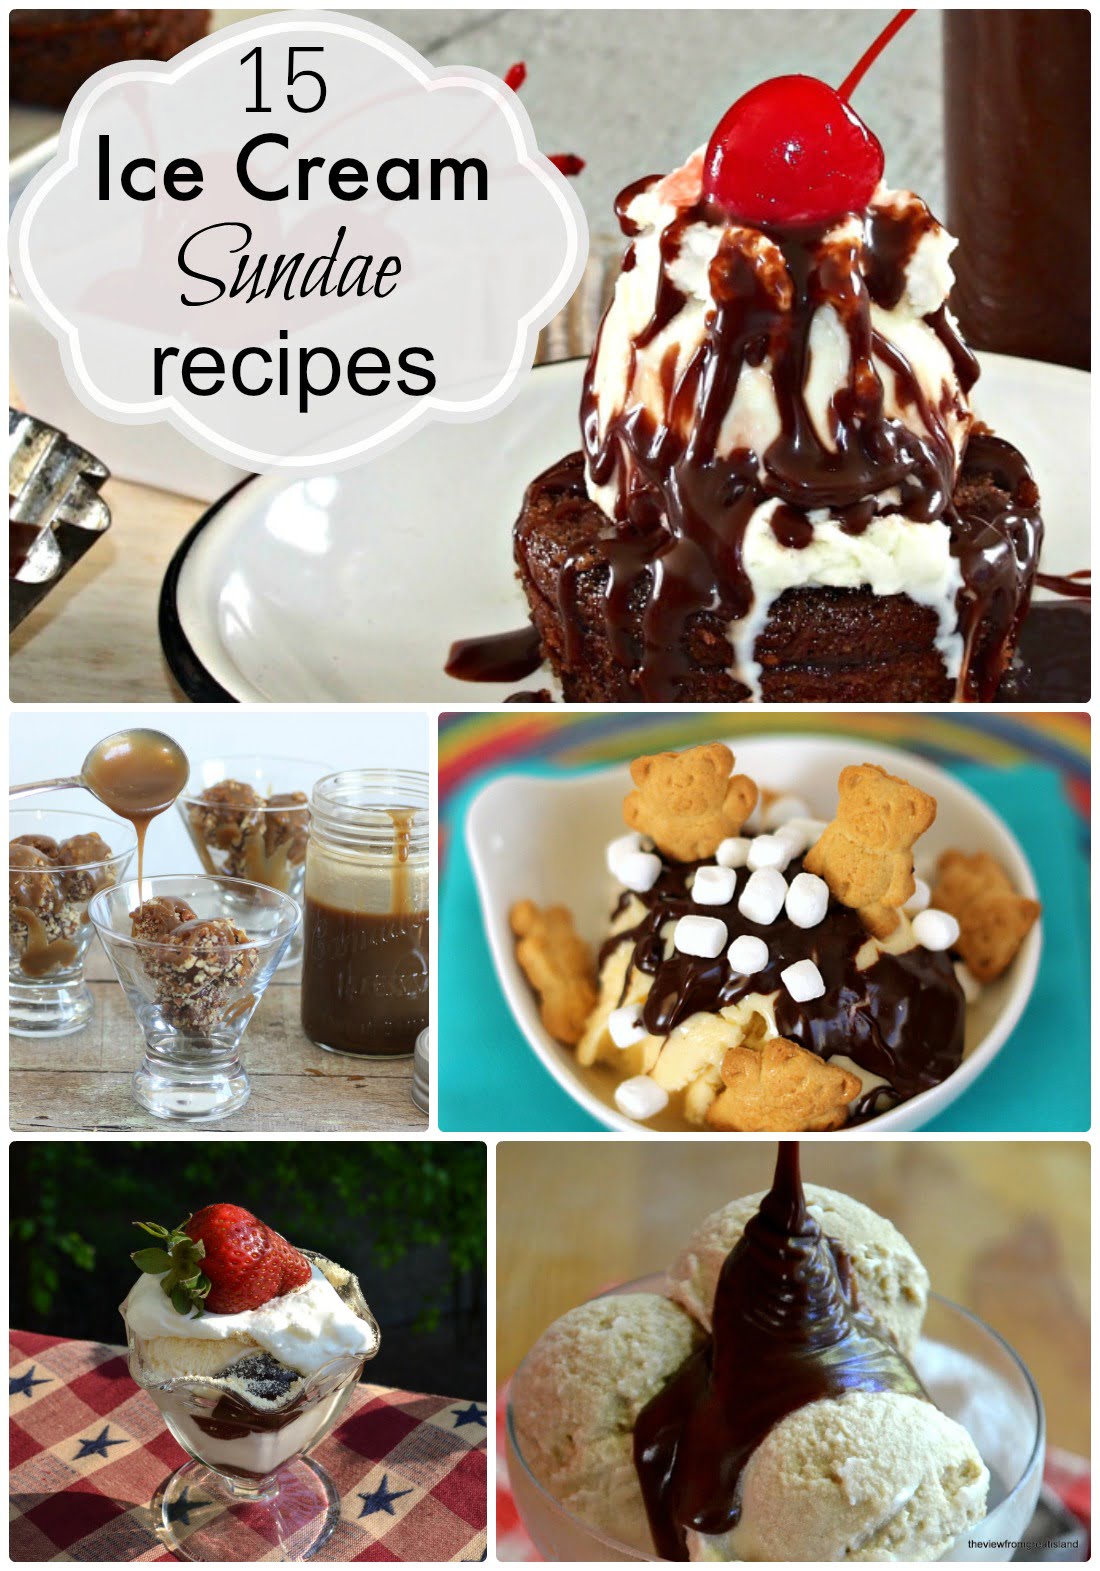 Ice Cream Sundae Recipes You Just Might Scream For!